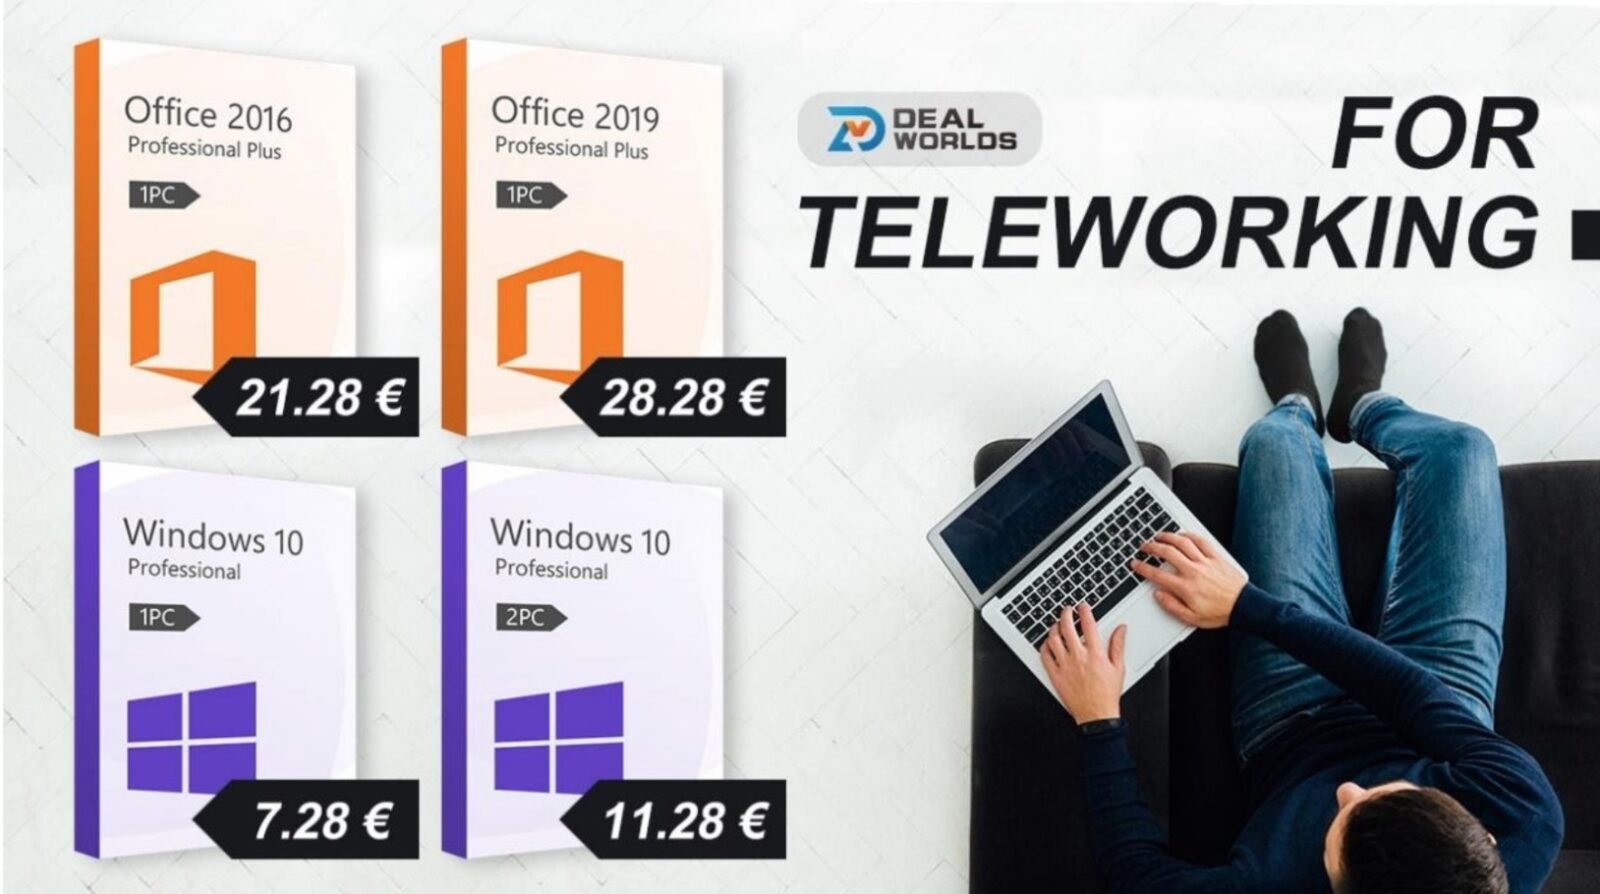 Offerta smart working Dealworlds: Windows 10 Pro da 5 €